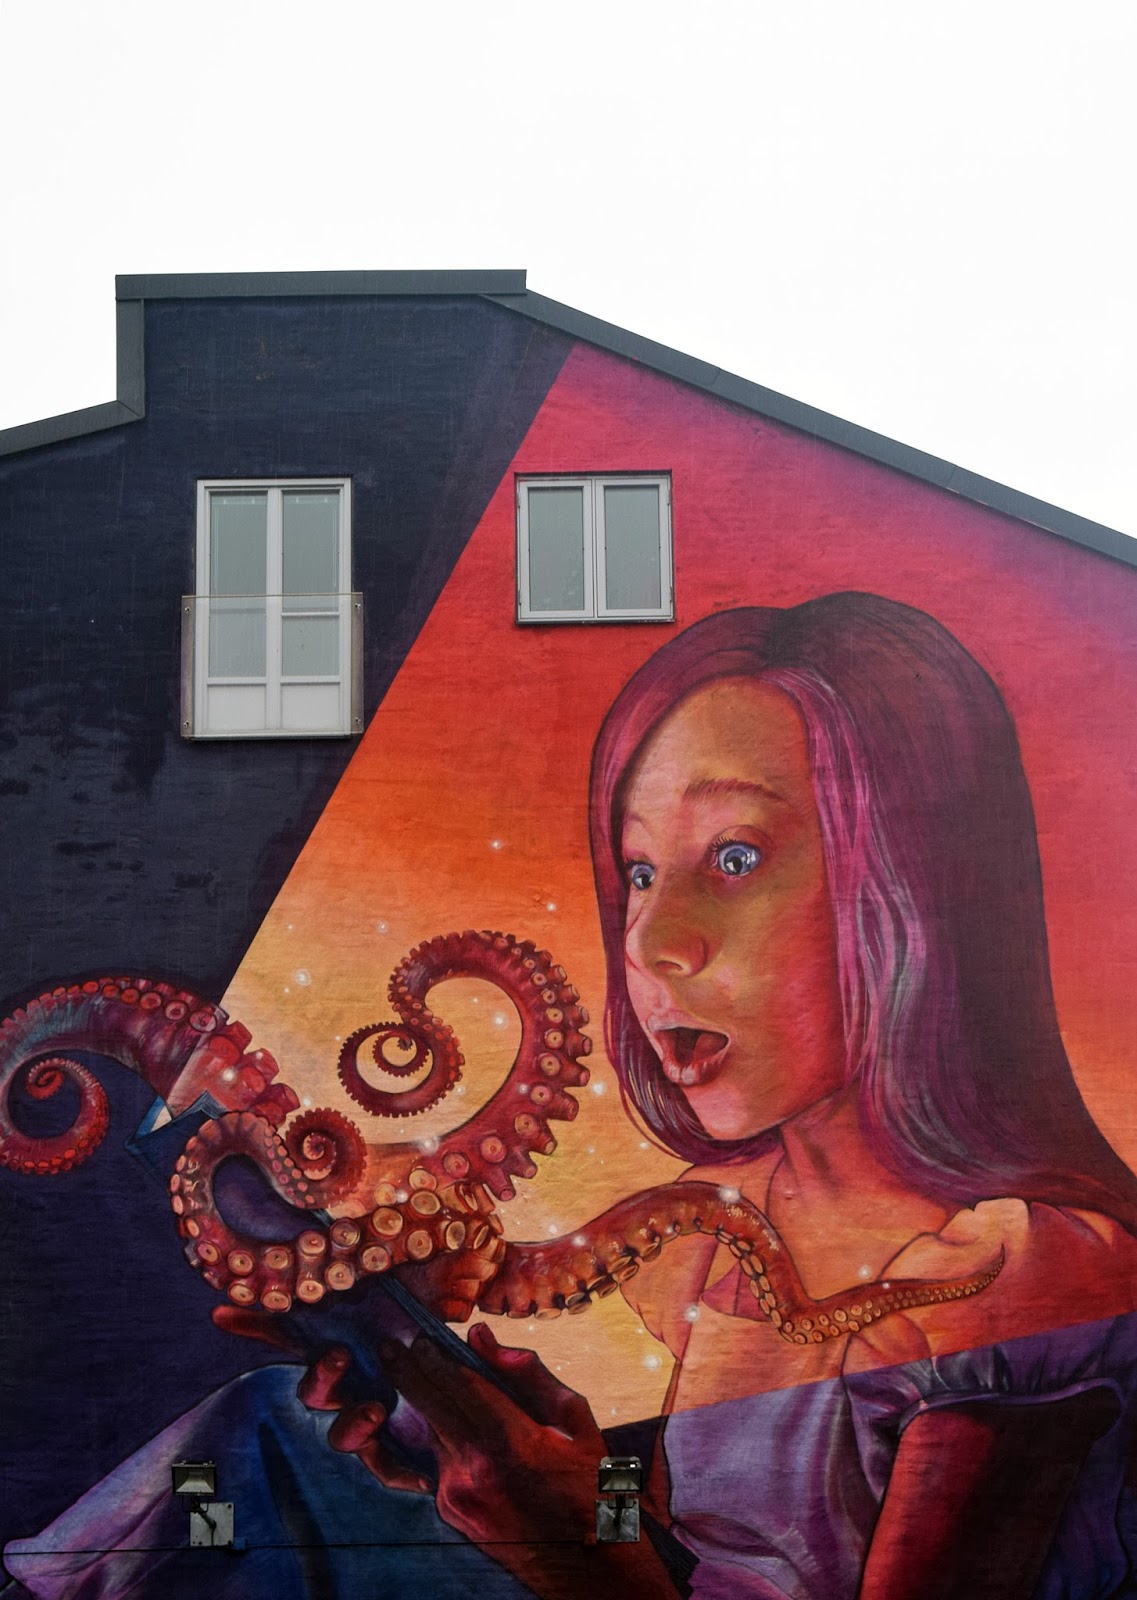 Giant street art in Malmö